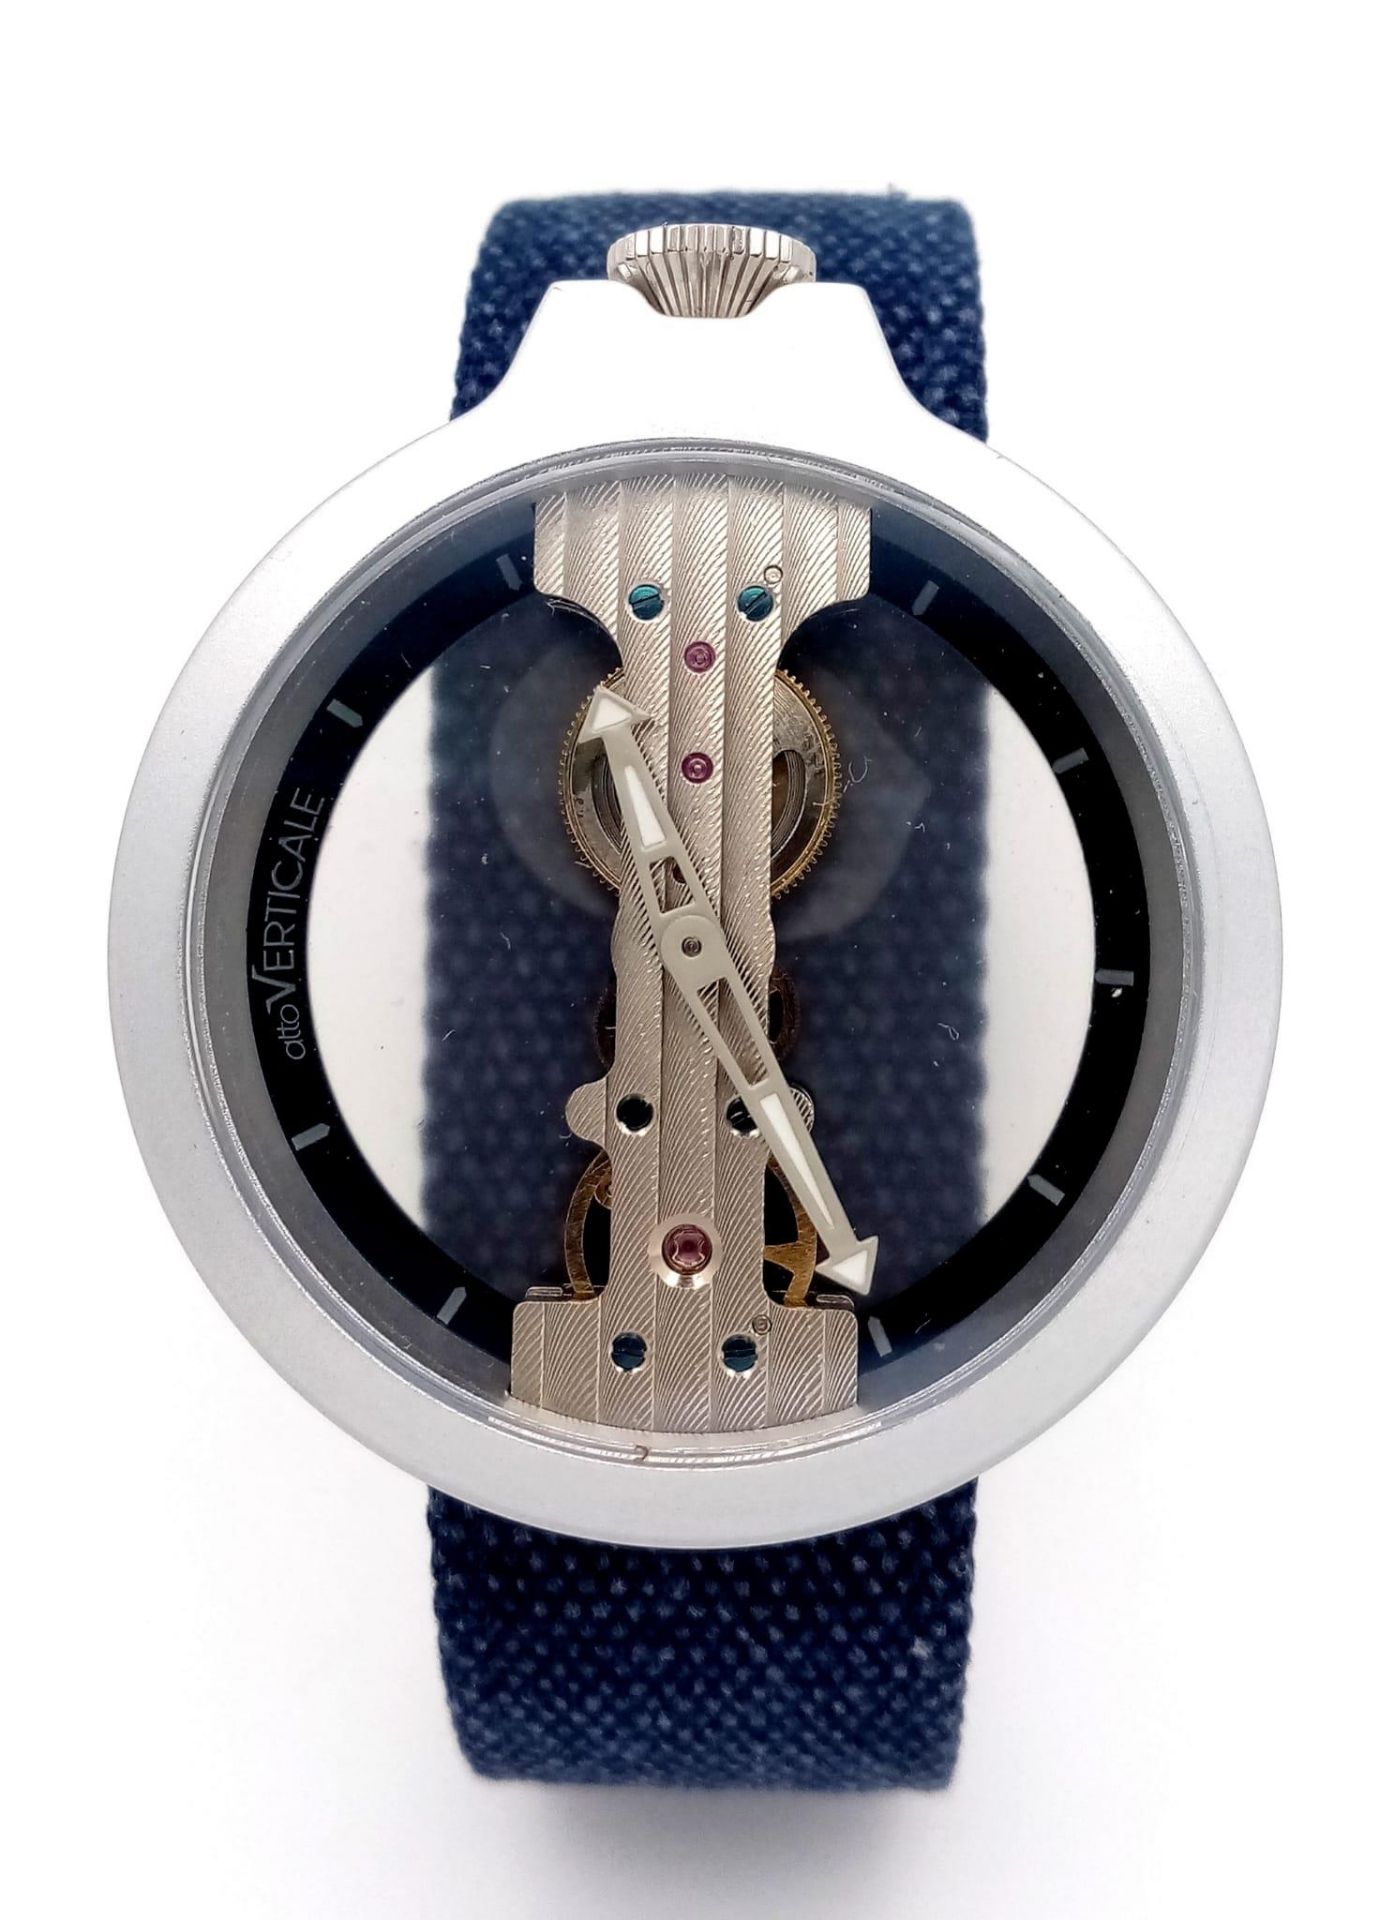 A Verticale Mechanical Top Winder Gents Watch. Blue Denim strap. Ceramic skeleton case - 42mm. As - Image 2 of 5